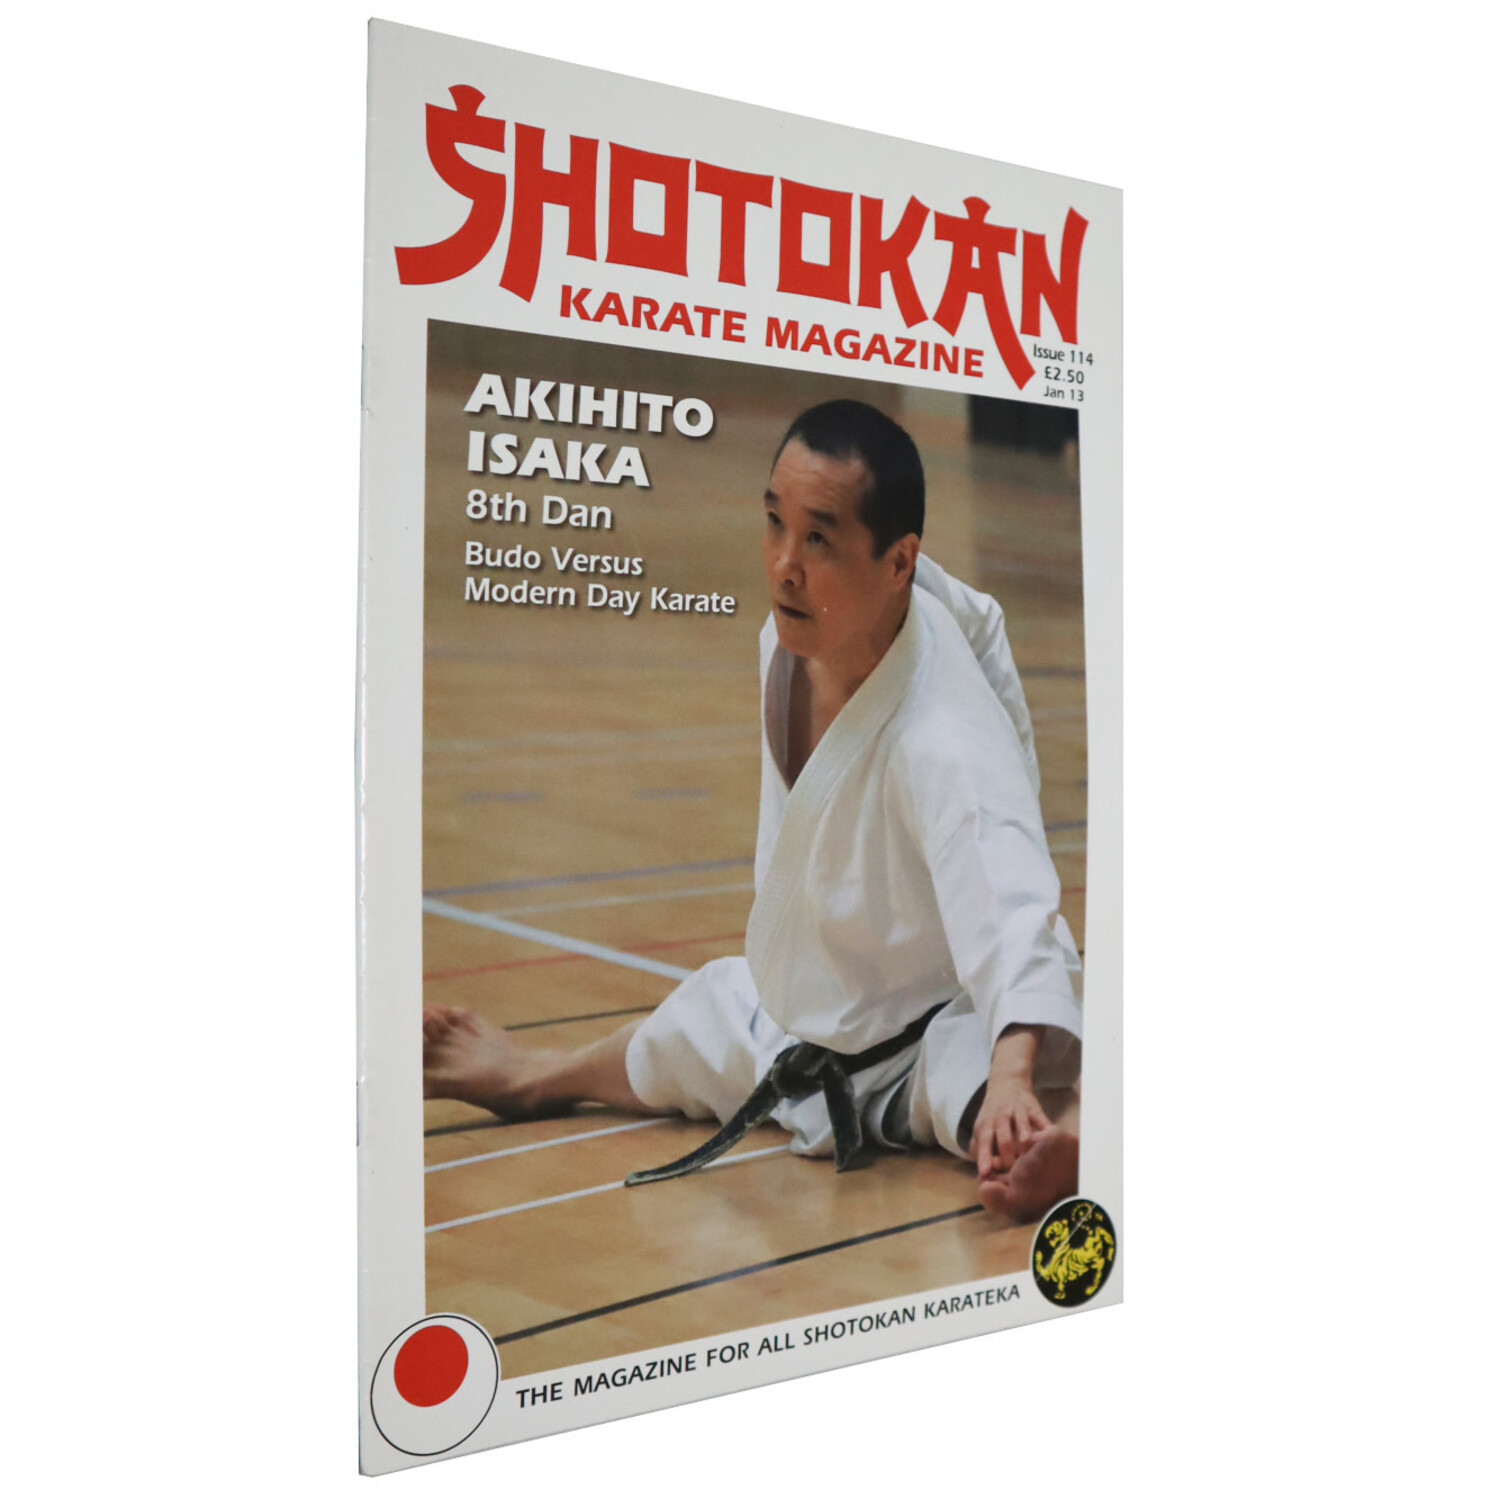 Shotokan Karate Magazine Issue 114 Enso Martial Arts Shop Bristol 